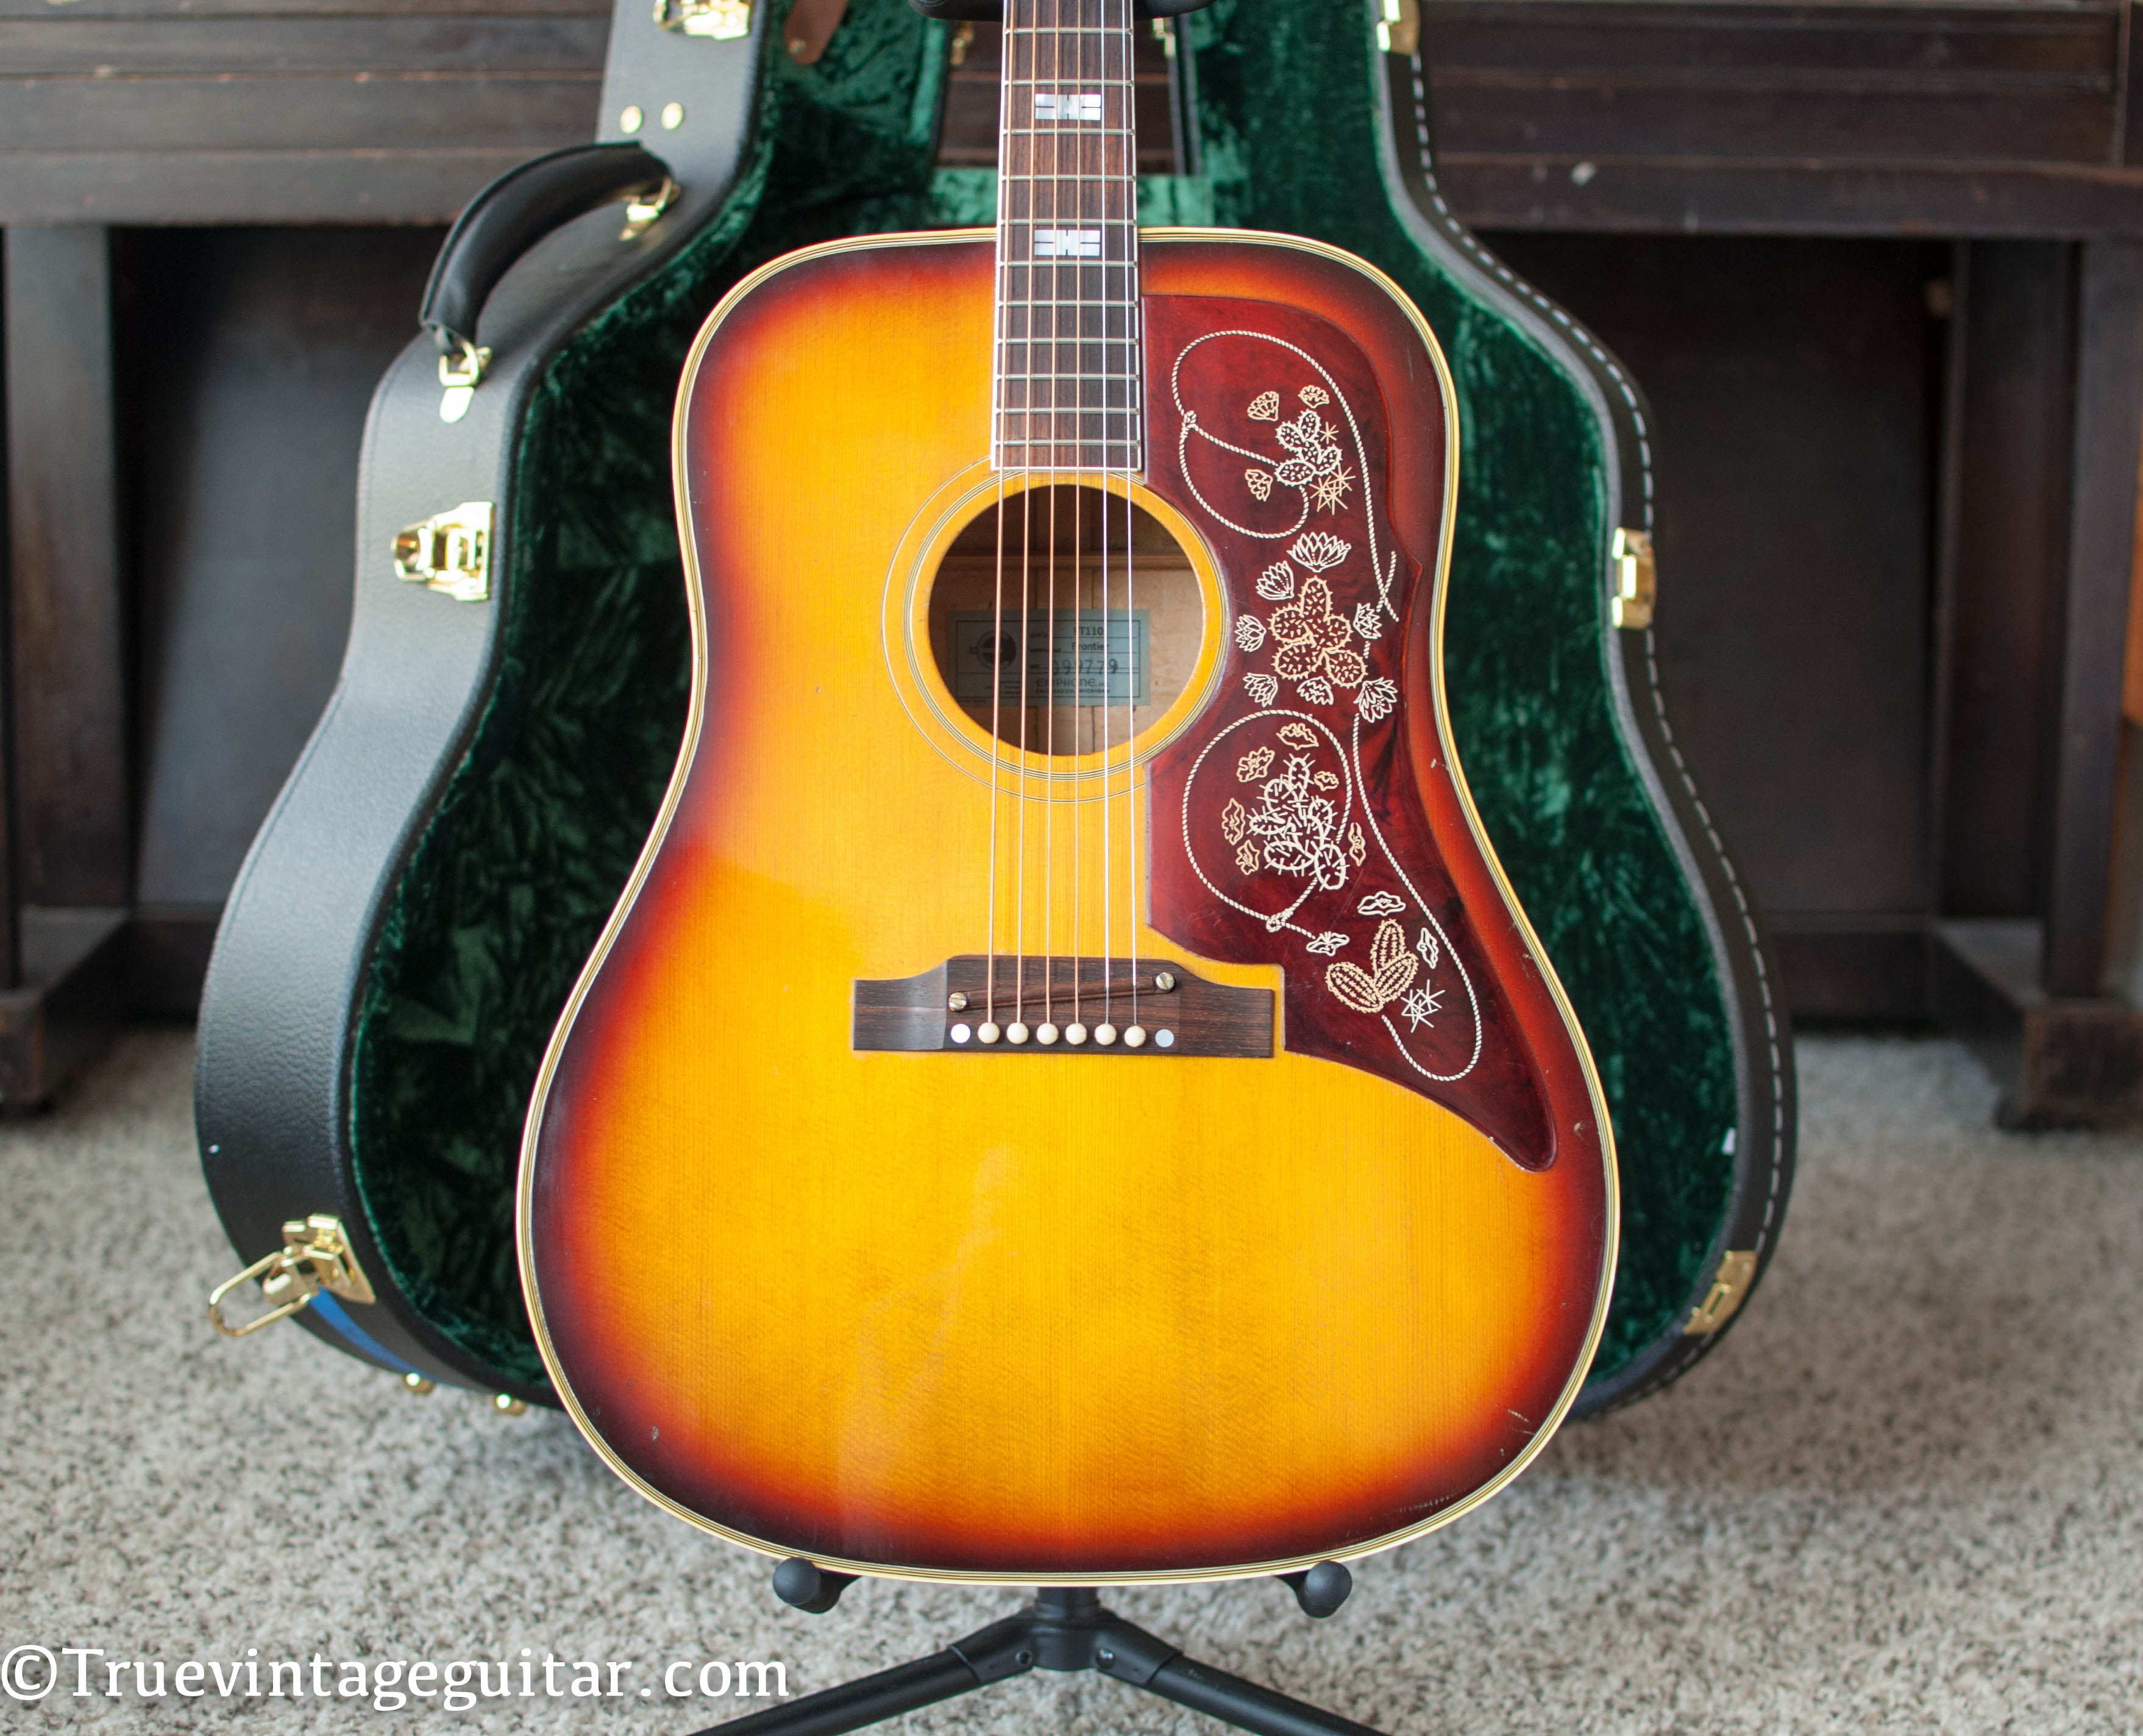 Vintage Epiphone acoustic guitar engraved pickguard cactus and lariat western motif